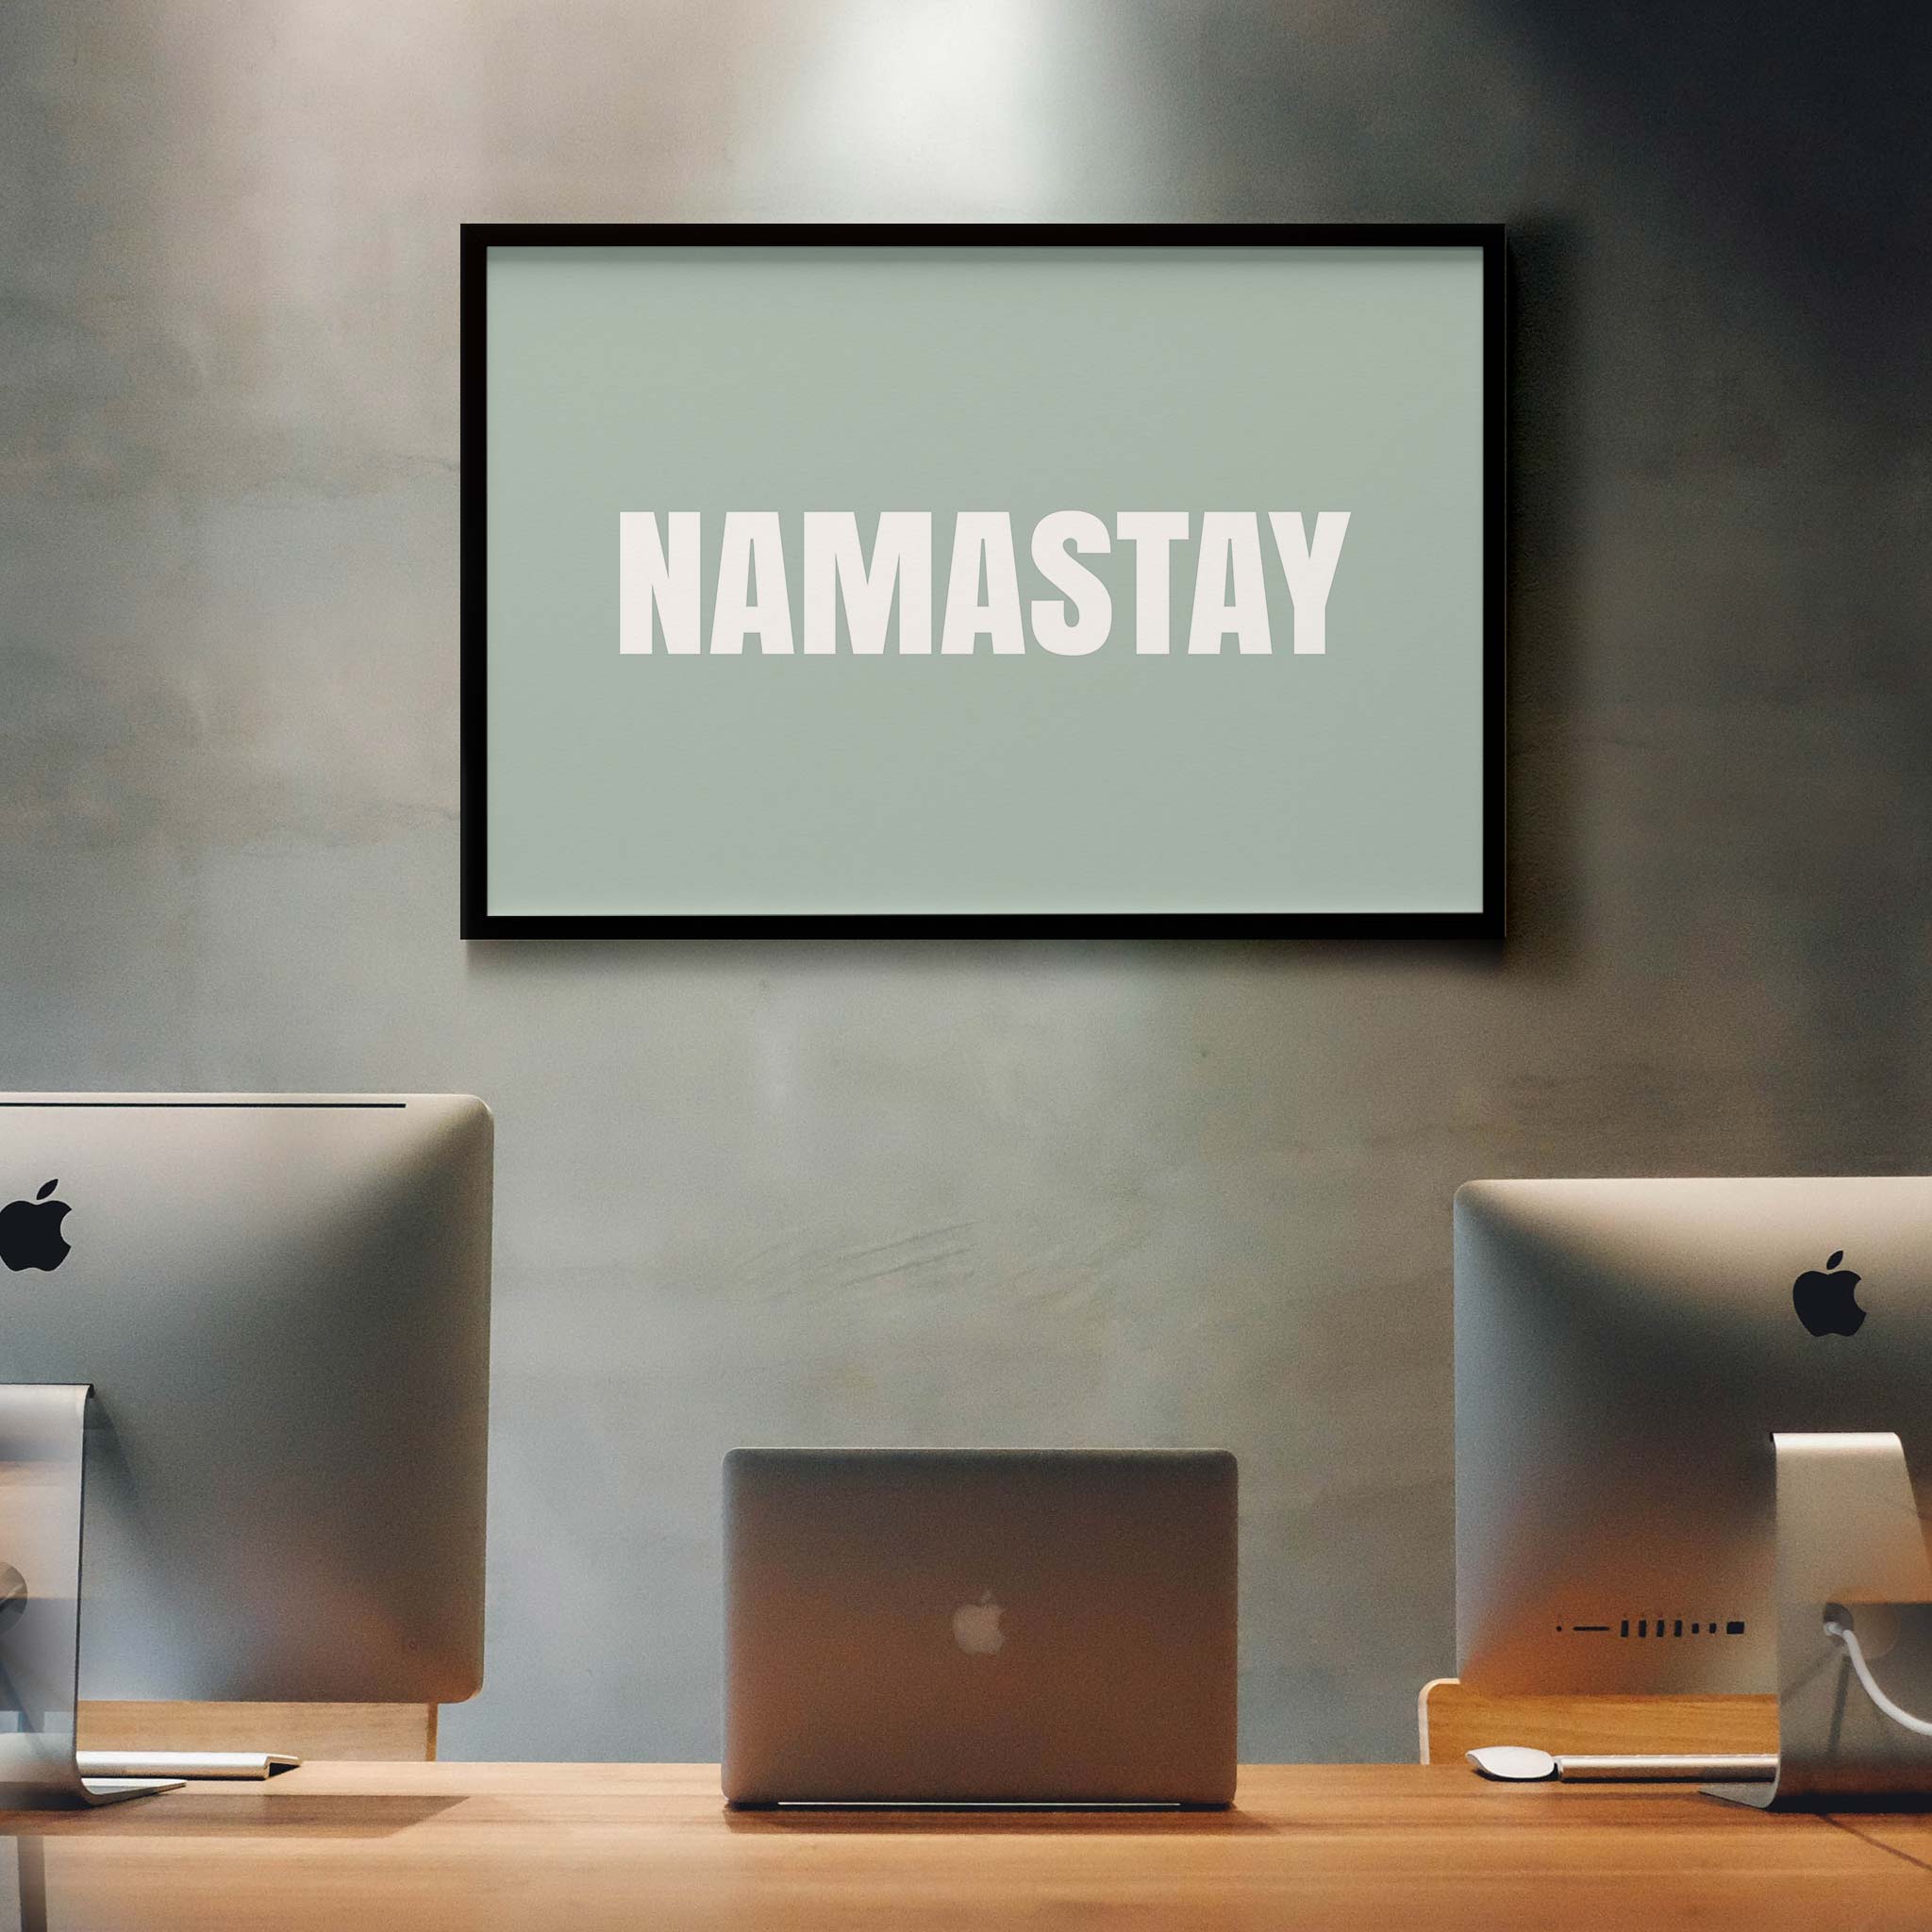 Namastay